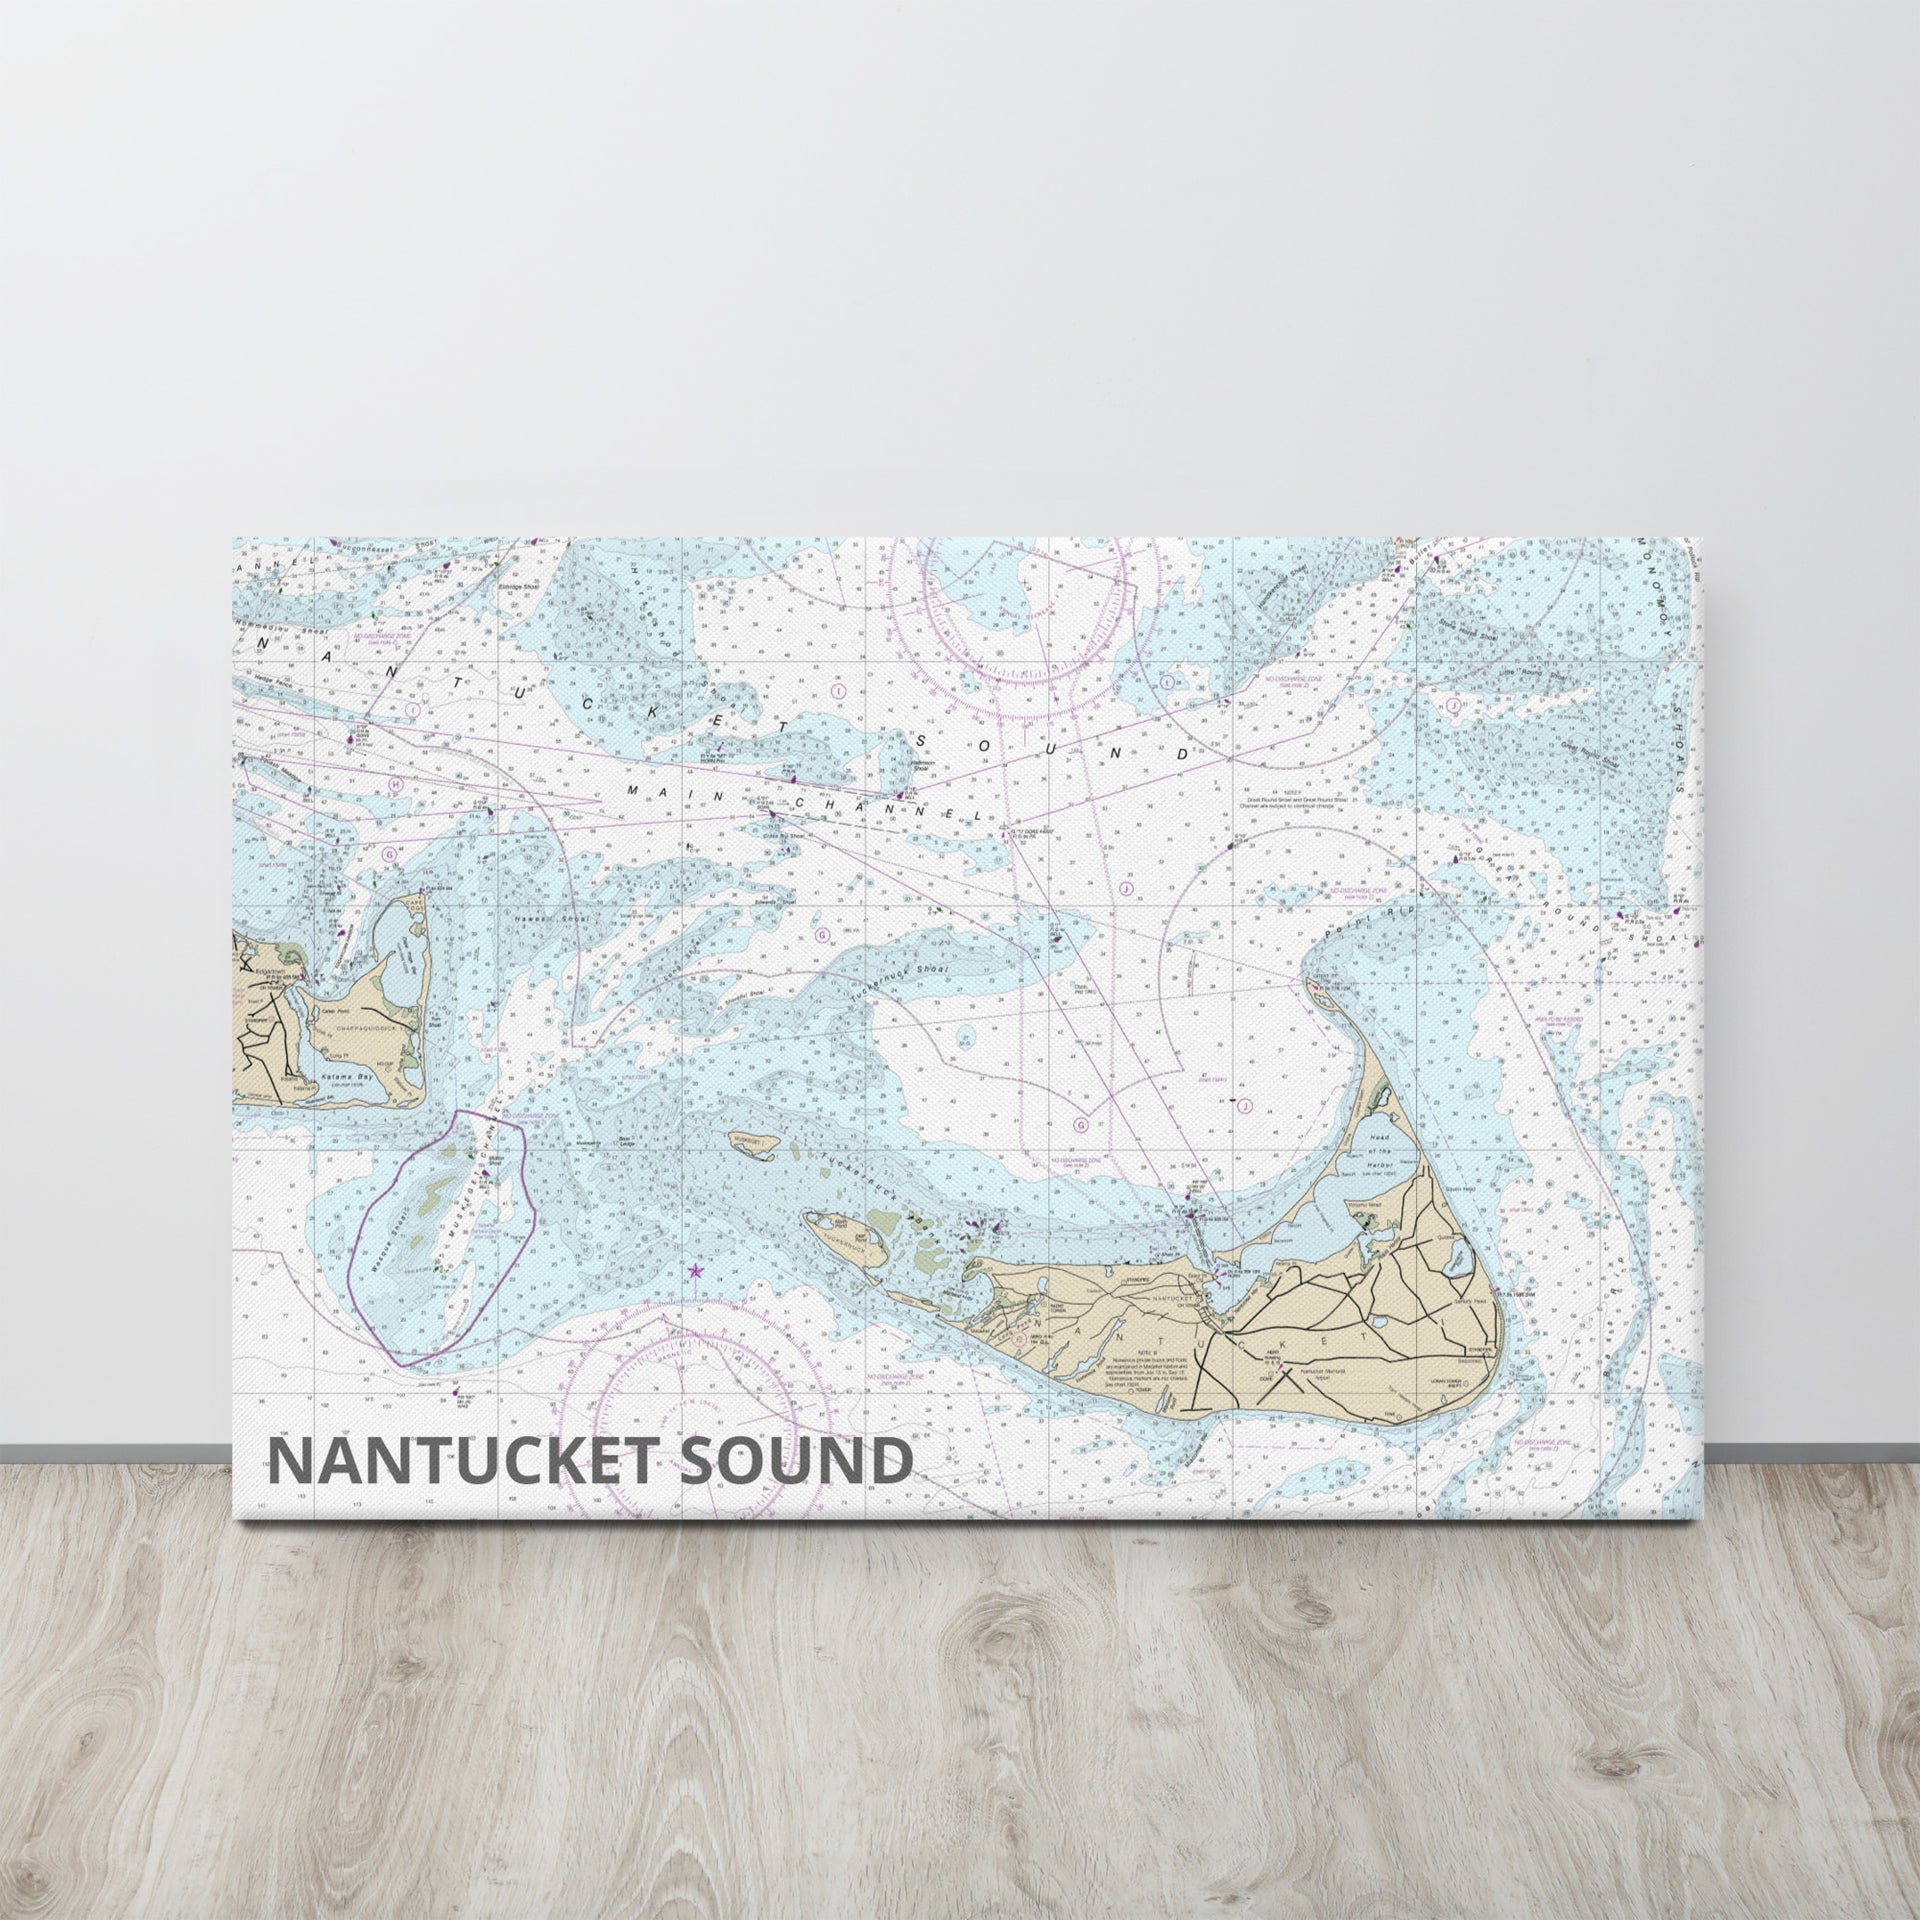 Wall art of Nantucket Sound - NOAA chart on canvas